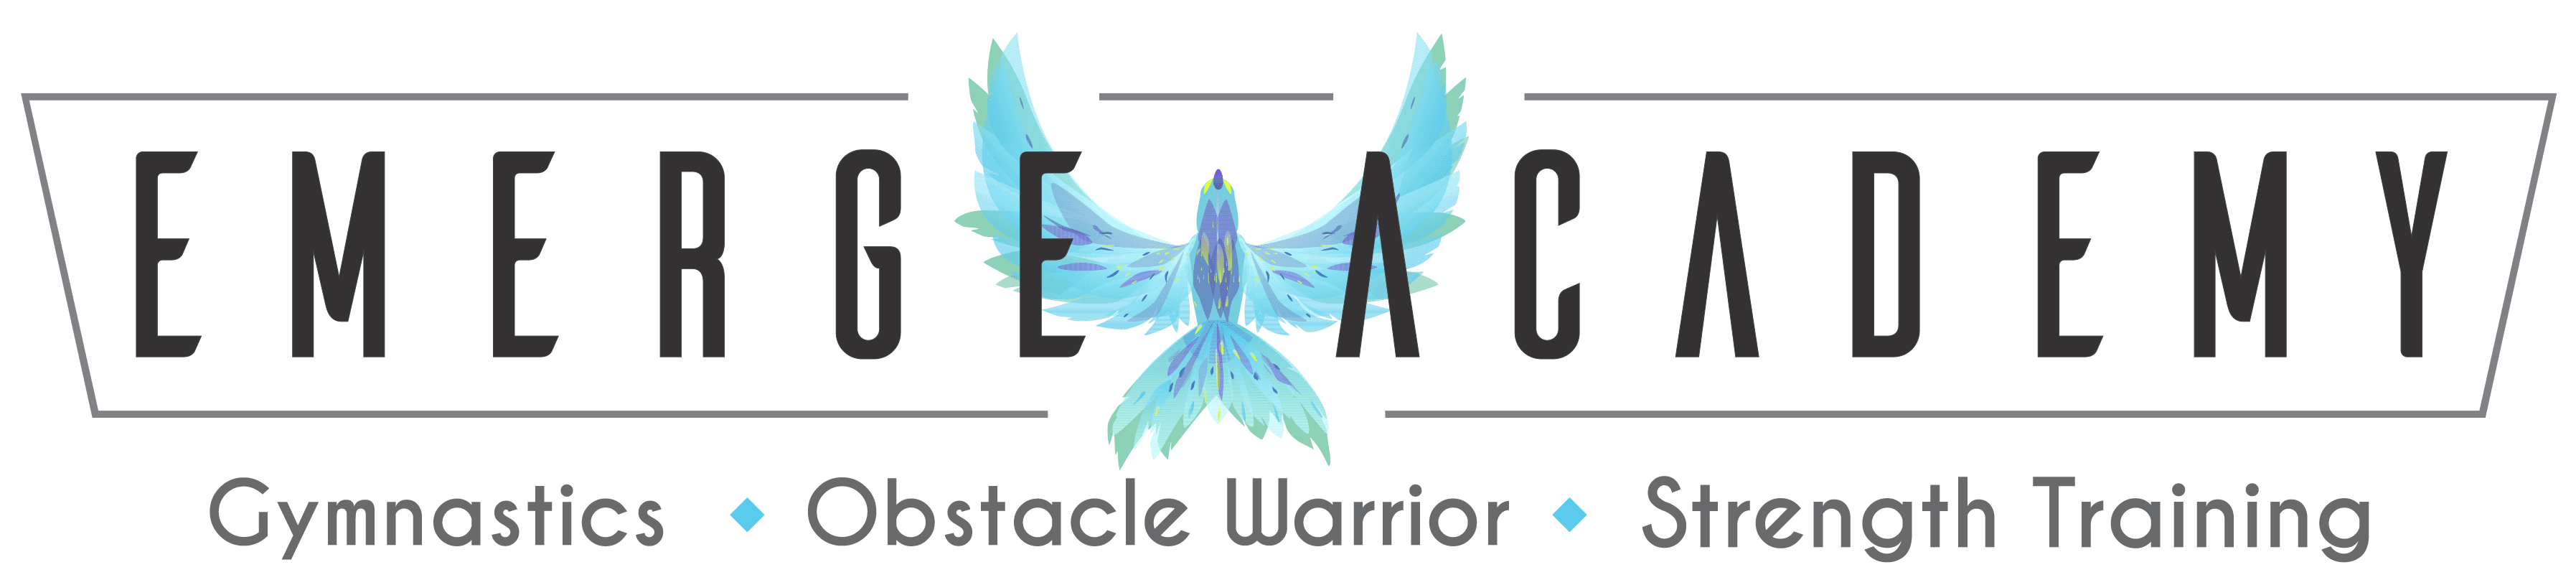 Emerge Academy logo with bird